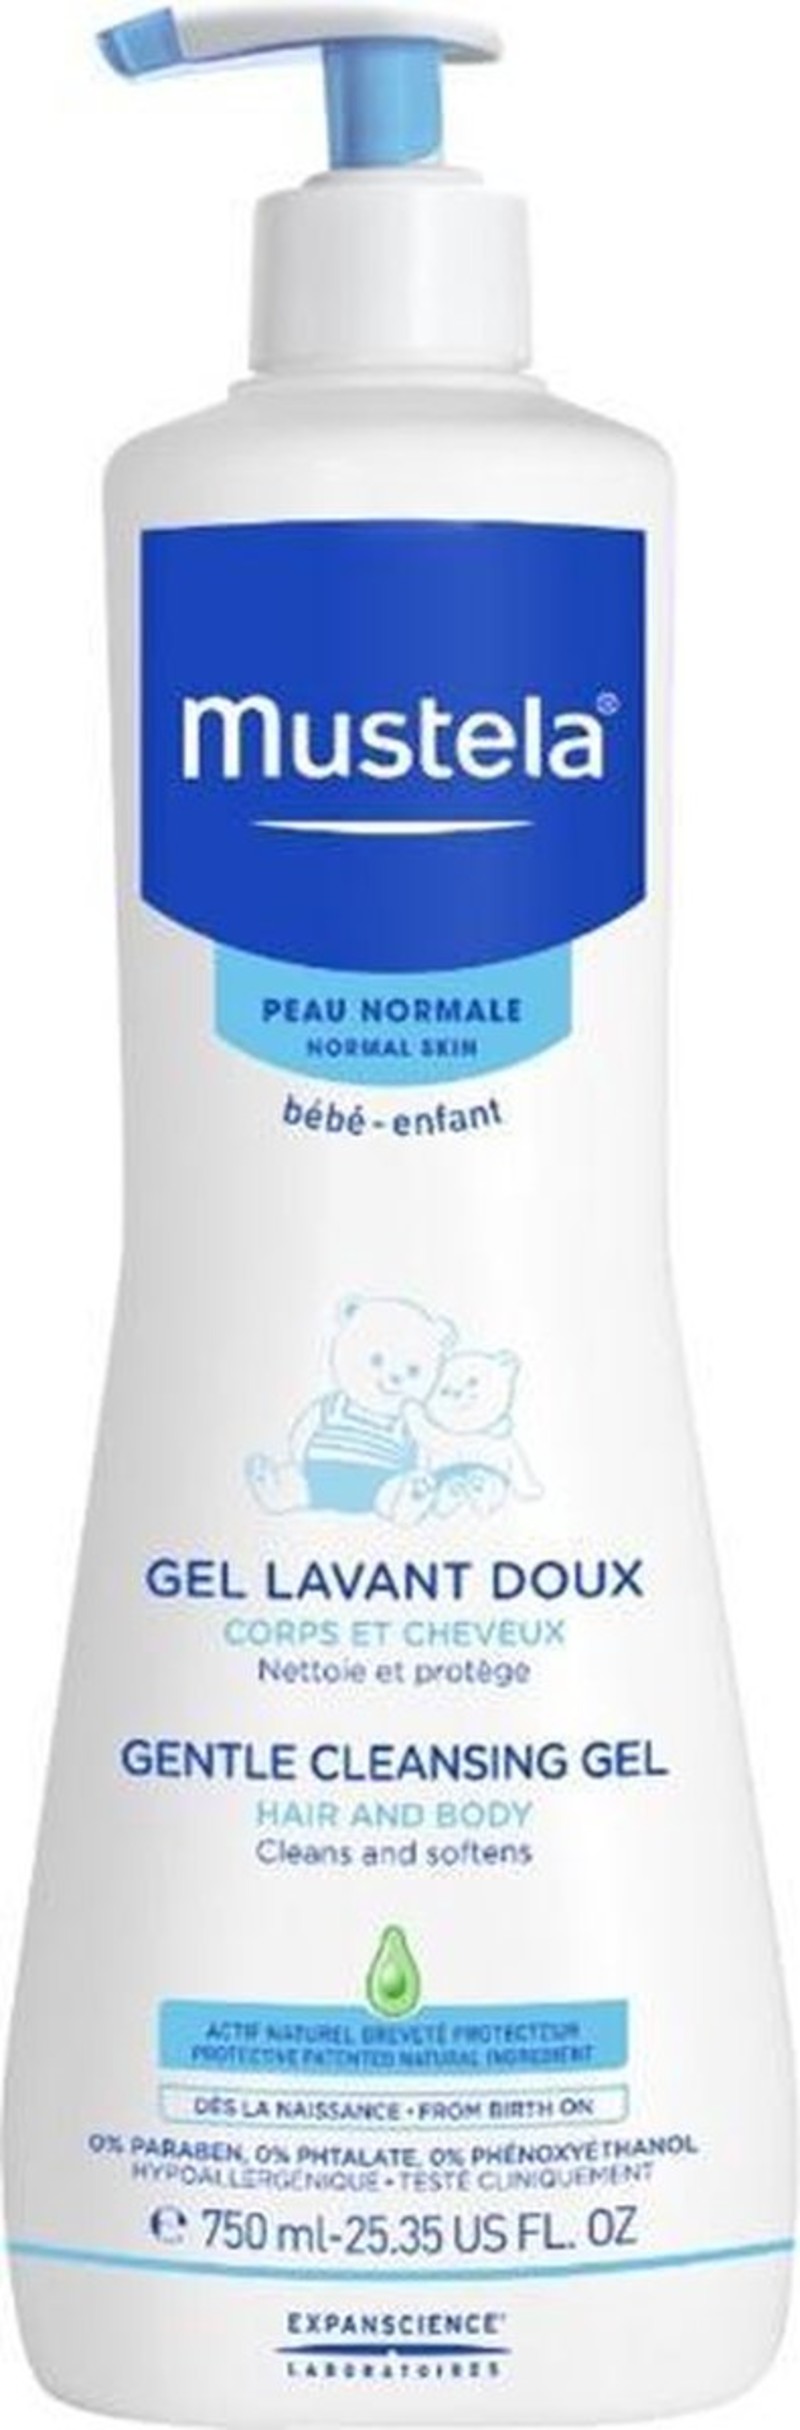 Mustela bebe gel lavant doux 750ml:, Mustela